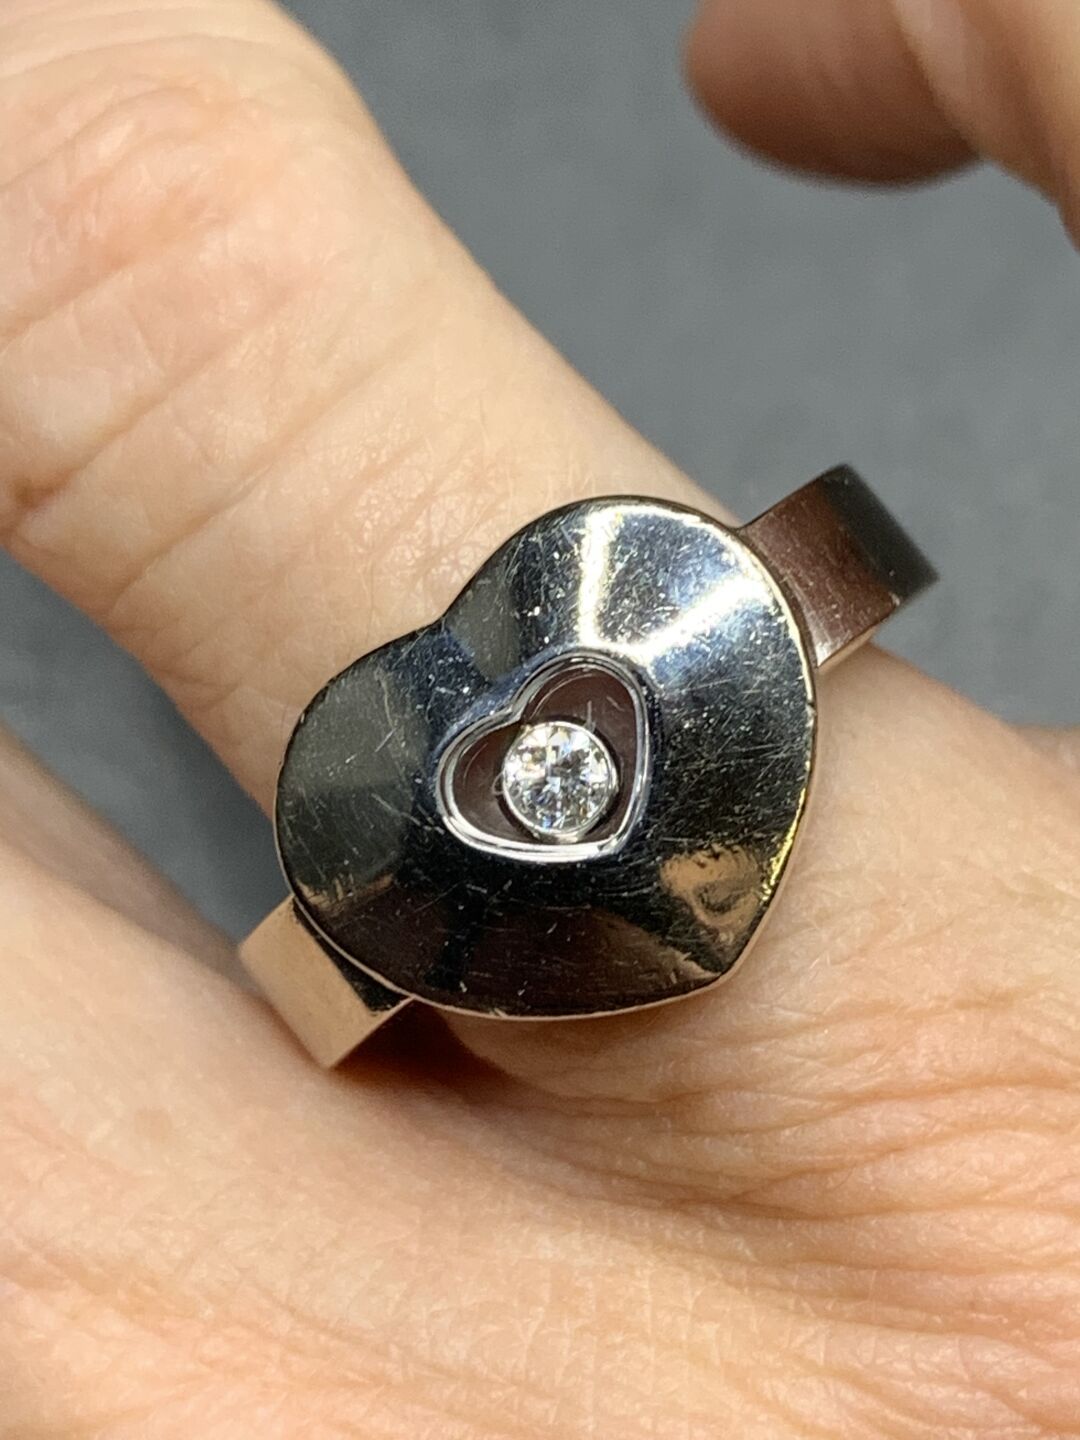 Null 萧邦750/°的白金心形戒指。移动钻石约0.10克拉。14.4 g Tdd 52

专家：皮埃尔-德拉耶